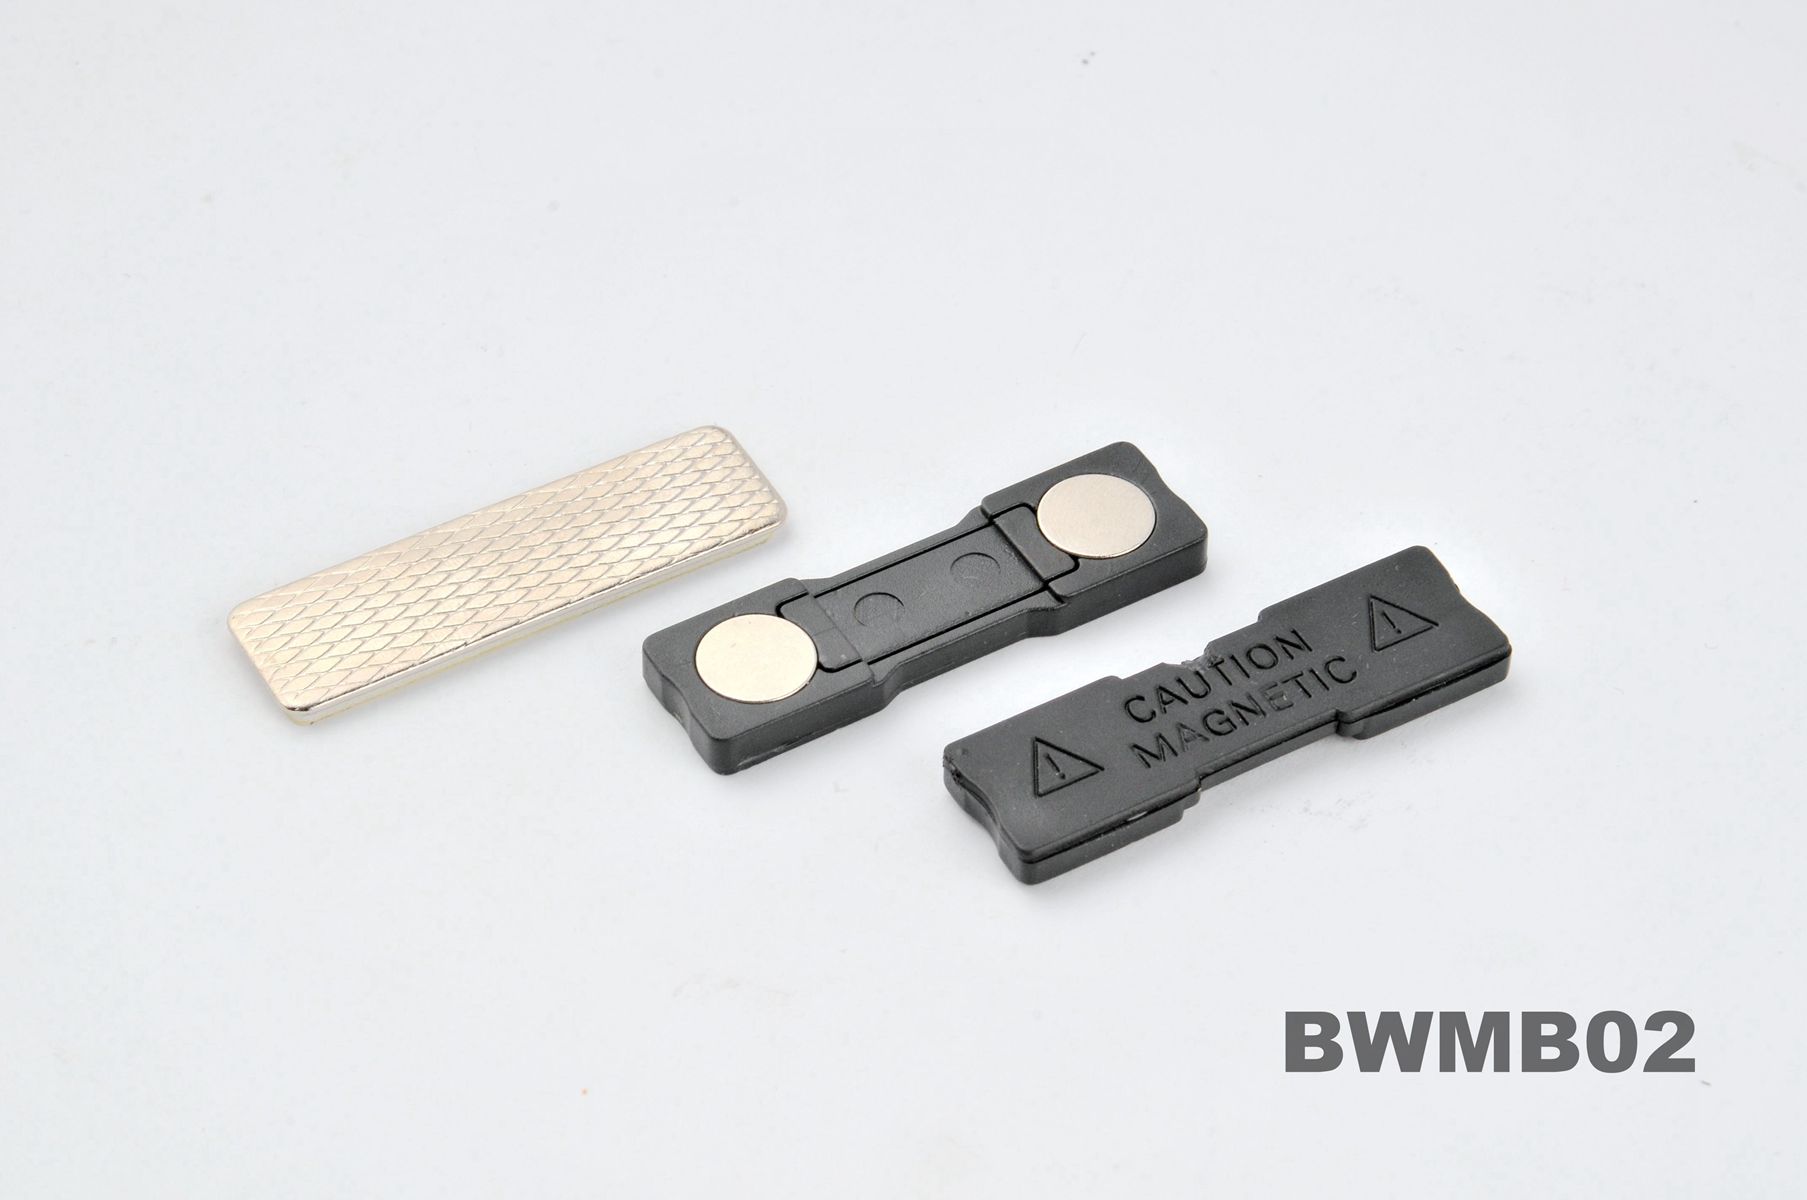 BWMB03 Magnetic Name Badge Holder